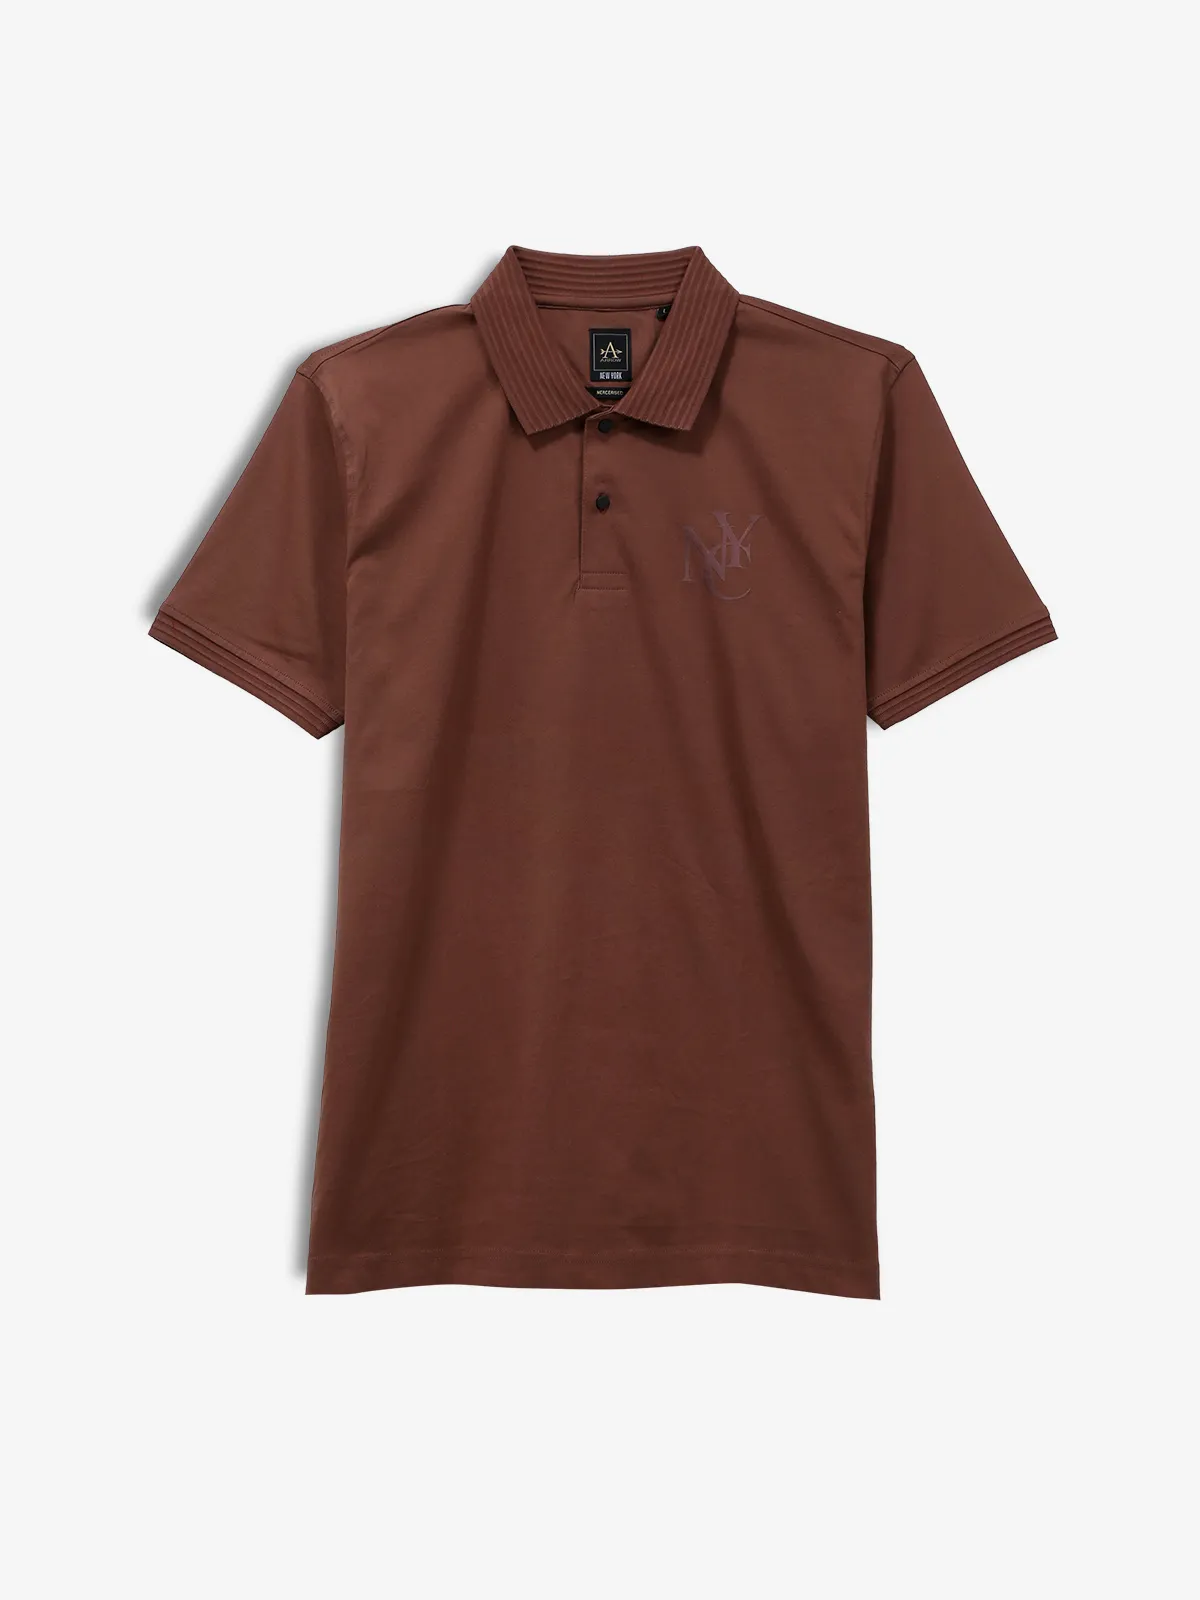 ARROW NEW YORK plain brown cotton t-shirt